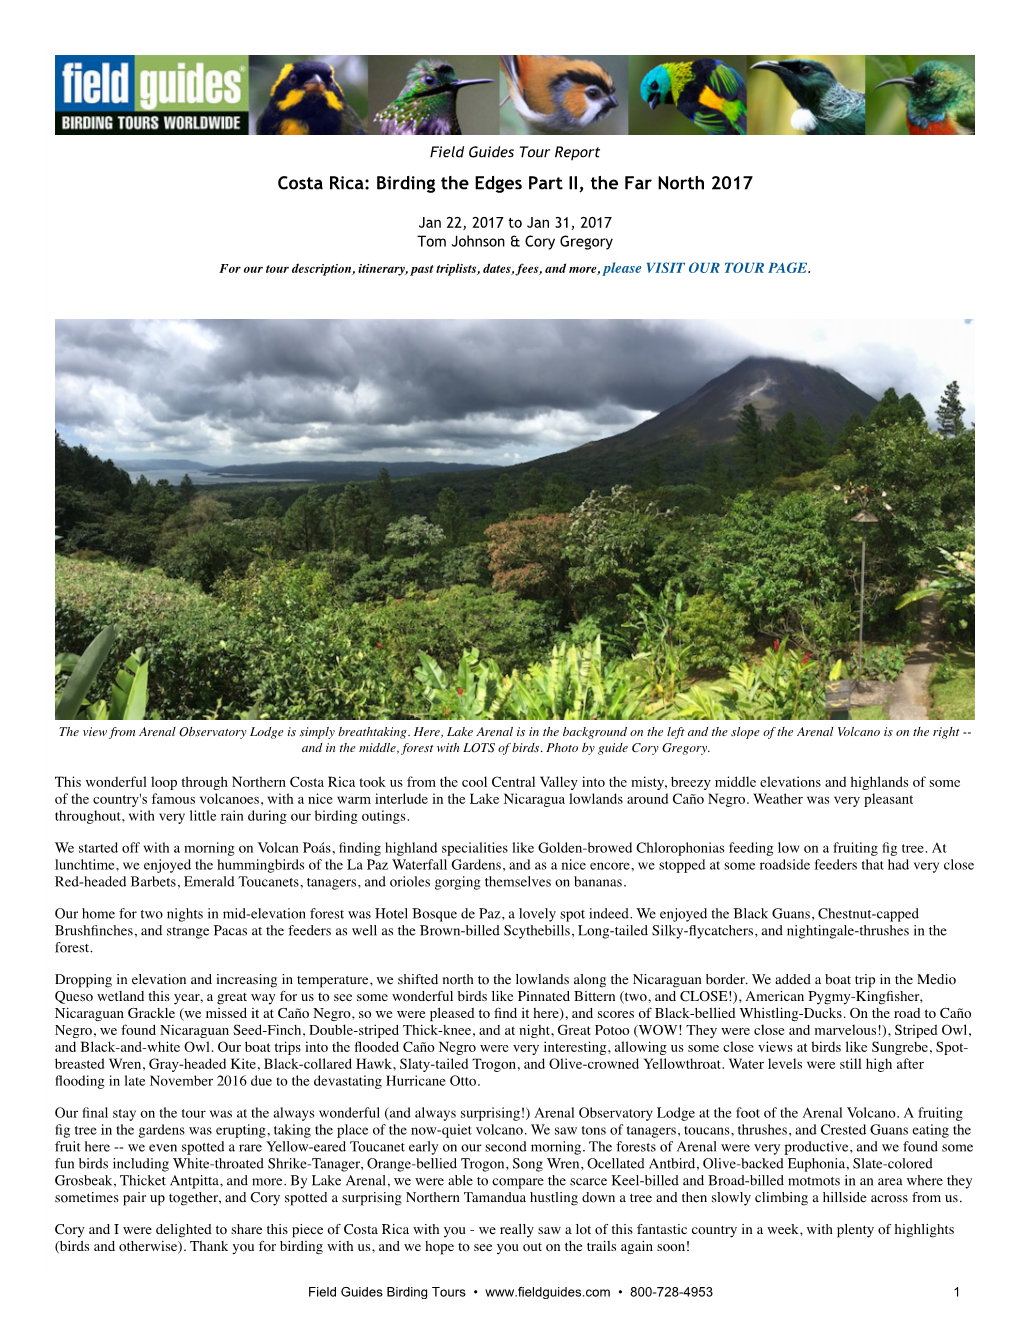 Costa Rica: Birding the Edges Part II, the Far North 2017